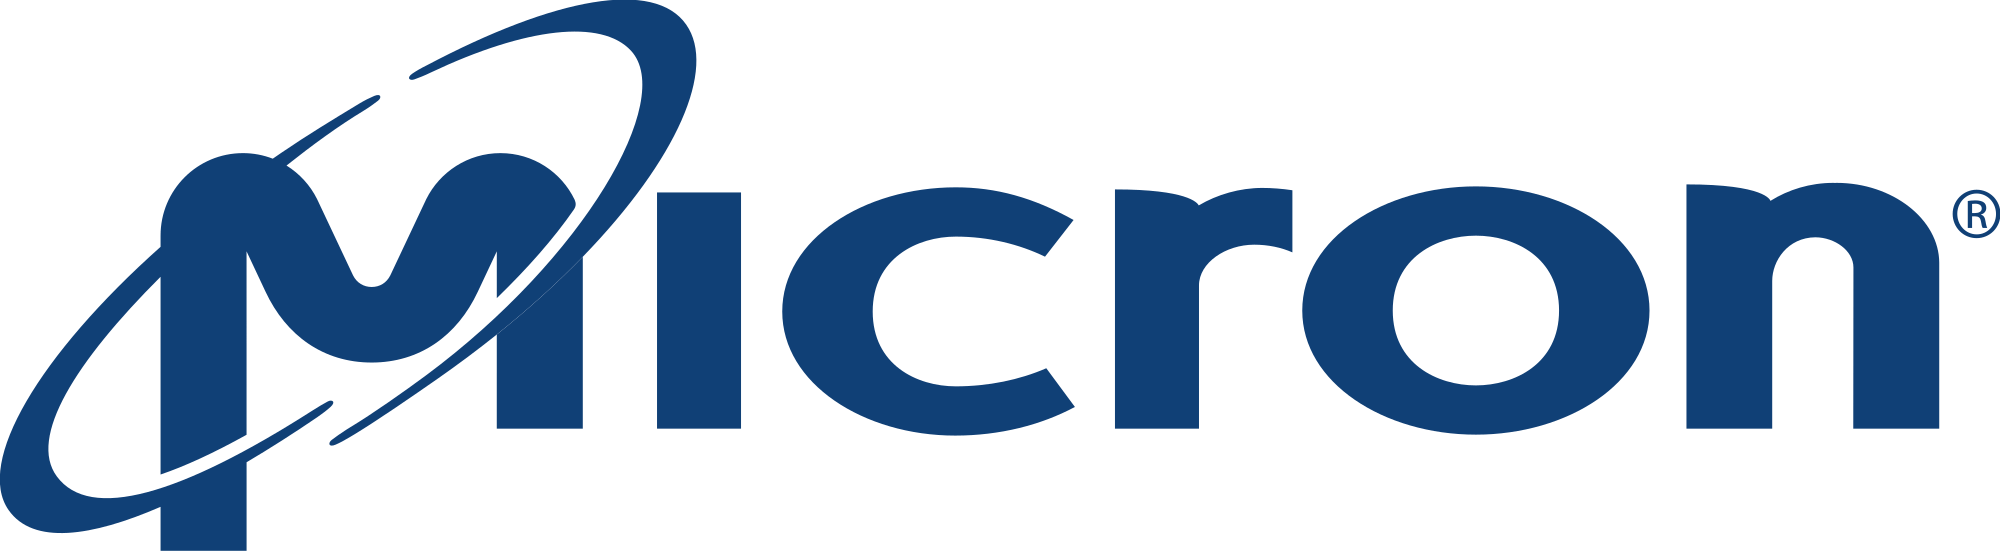 Micron Technology Logo - Micron Technology Shares Jump On $10B Share Repurchase & Intel Deal